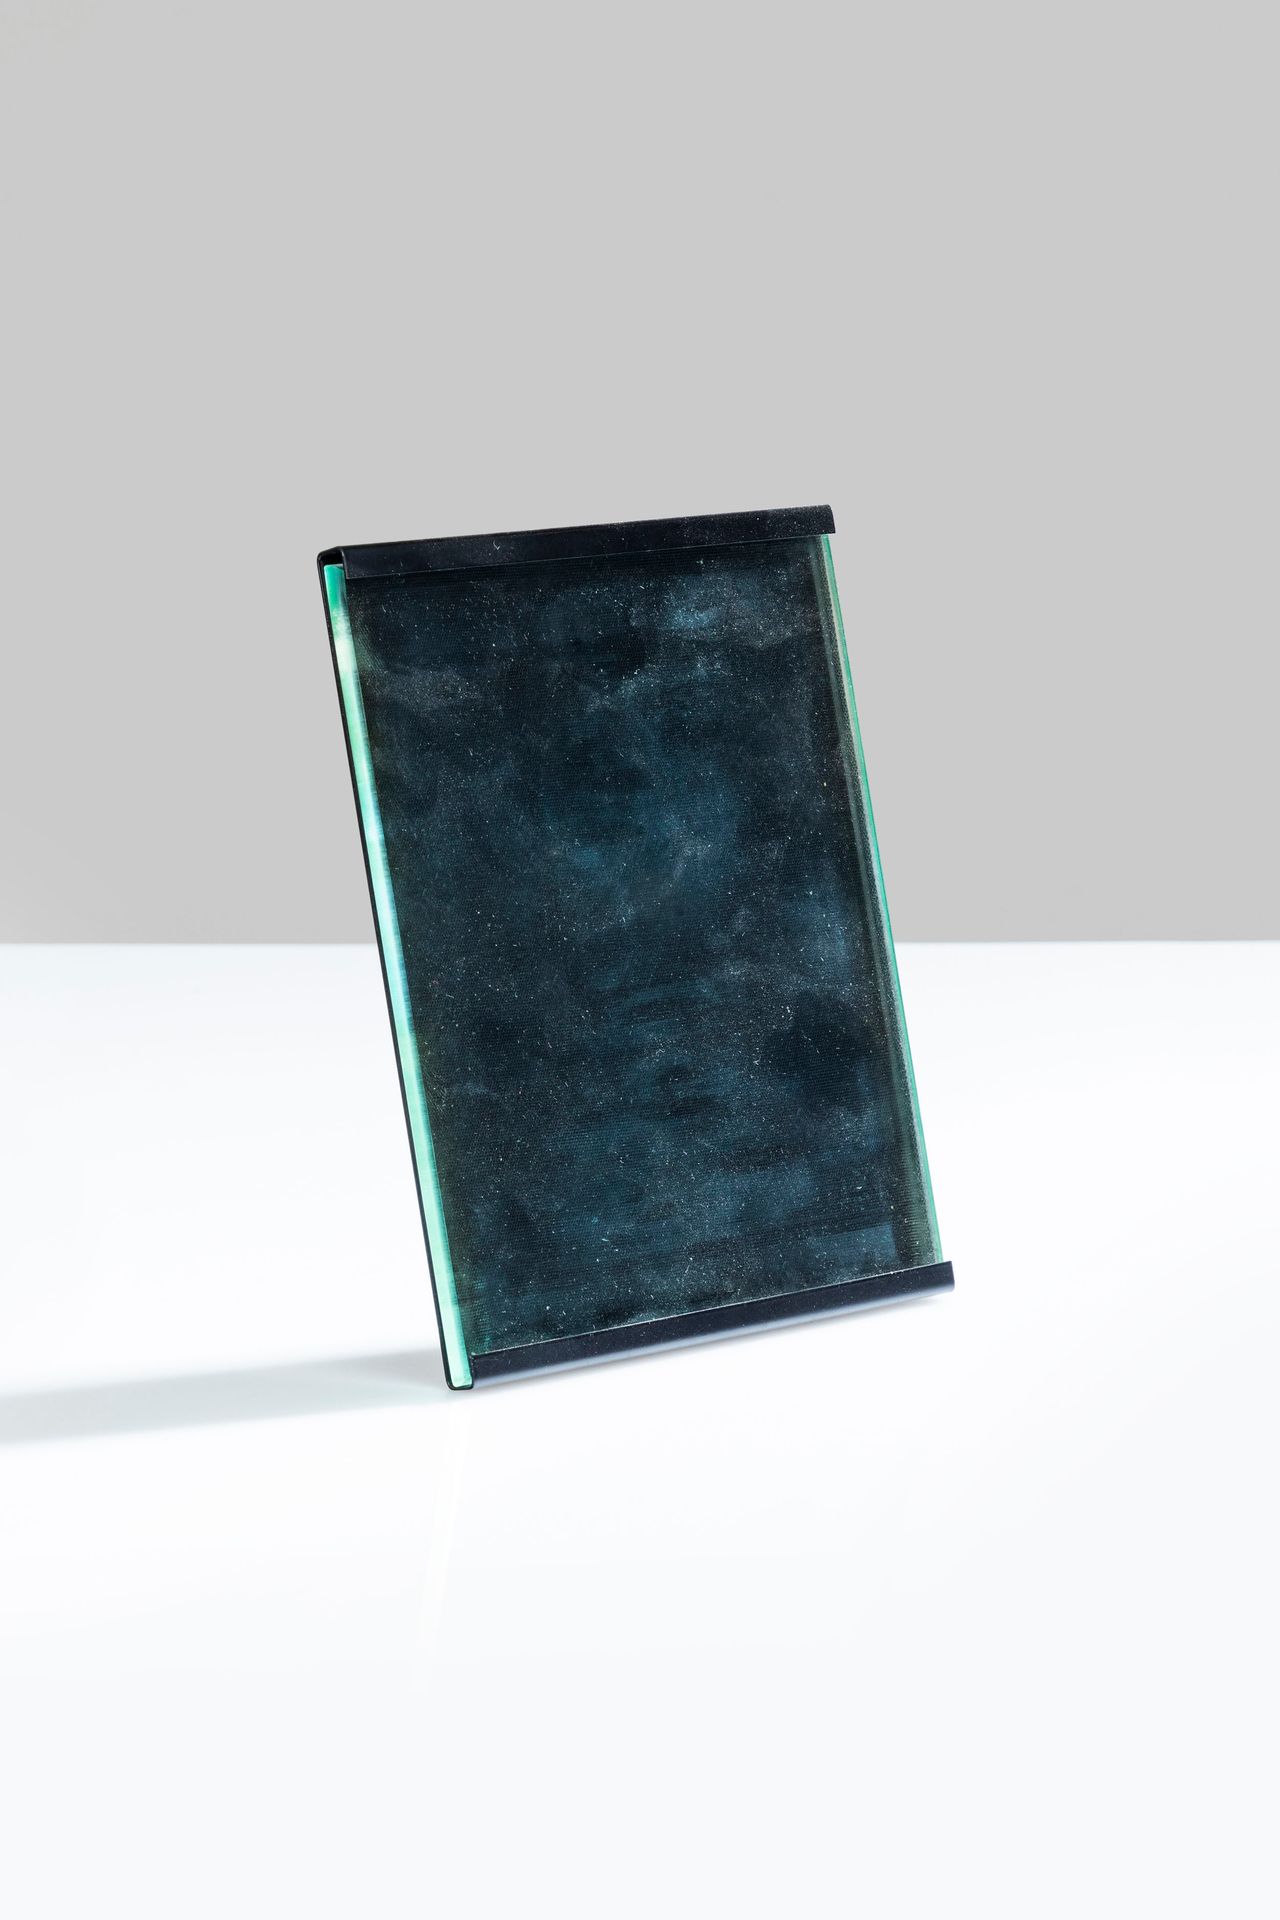 GIANFRANCO FRATTINI 肖像支架。珐琅彩金属，磨砂水晶。制造标记。 Progetti生产，约1980年 
厘米20x15x6
G. FRATTI&hellip;